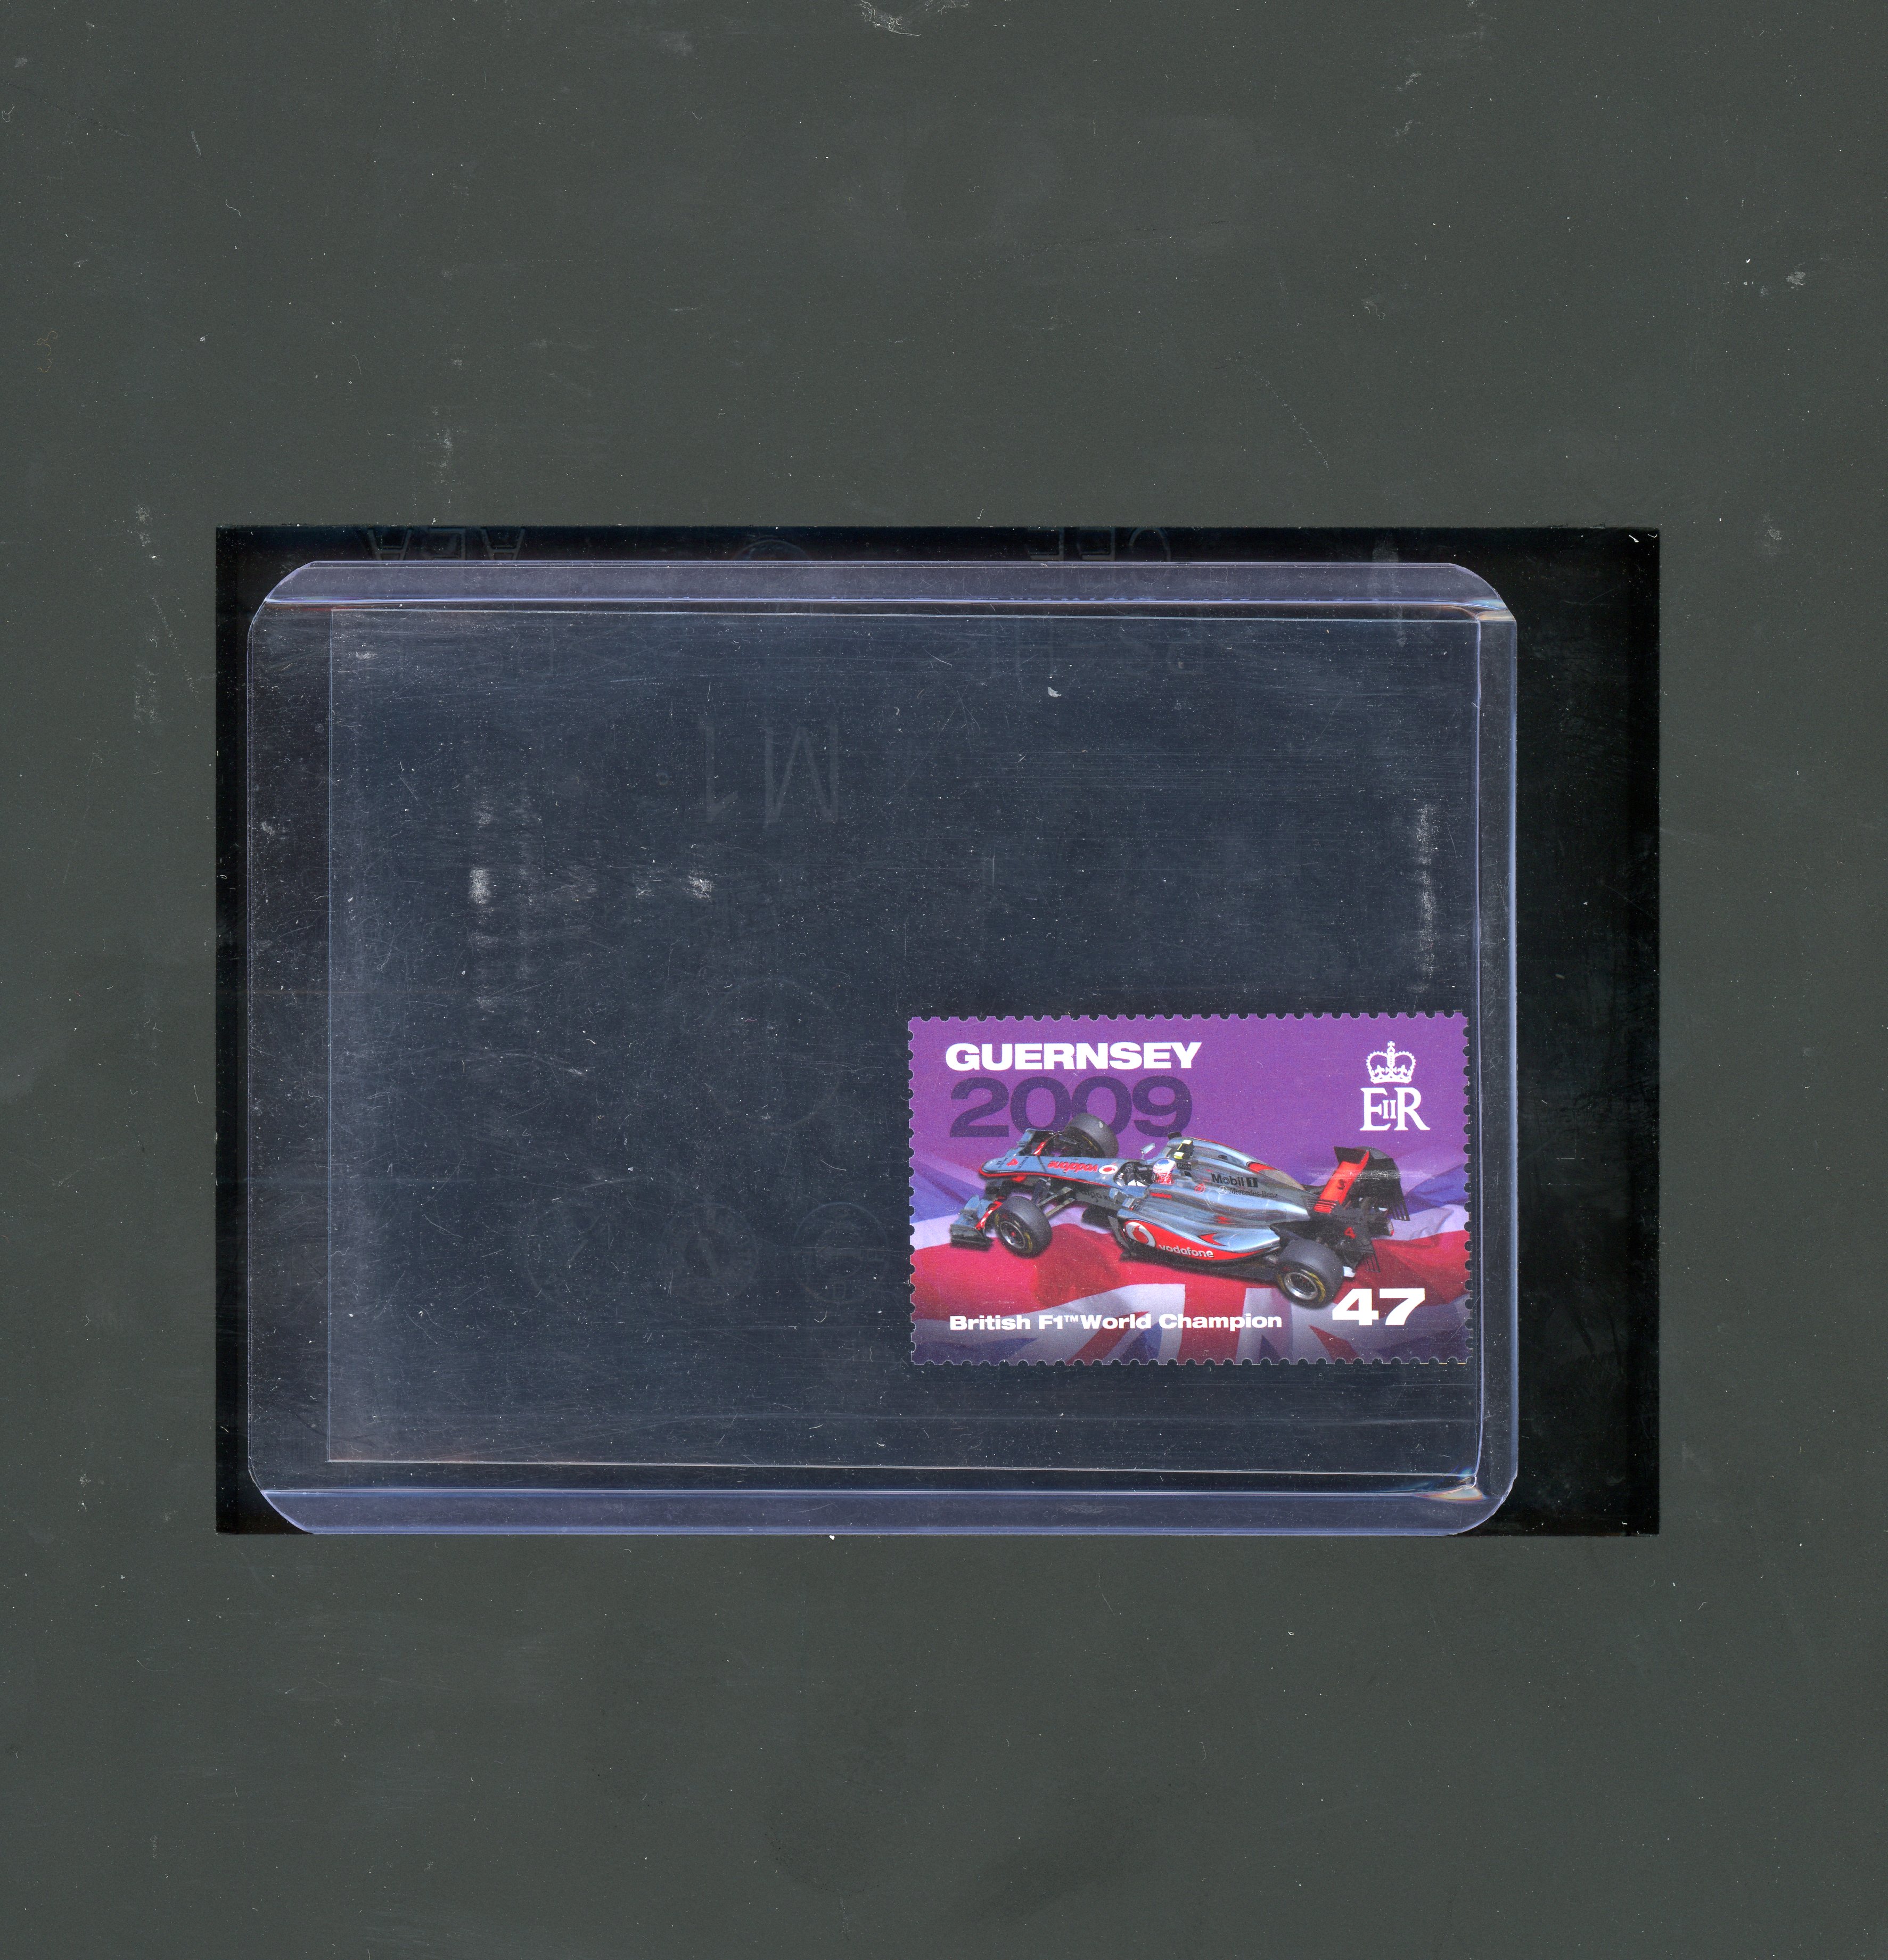 2009 Guernsey Stamps Lewis Hamilton 卡淘首张 超稀有 根西岛限定 纪念英国世界冠军车手邮票 刘易斯 汉密尔顿 F1 Formula 卡品如图 Kk2【JA收藏】